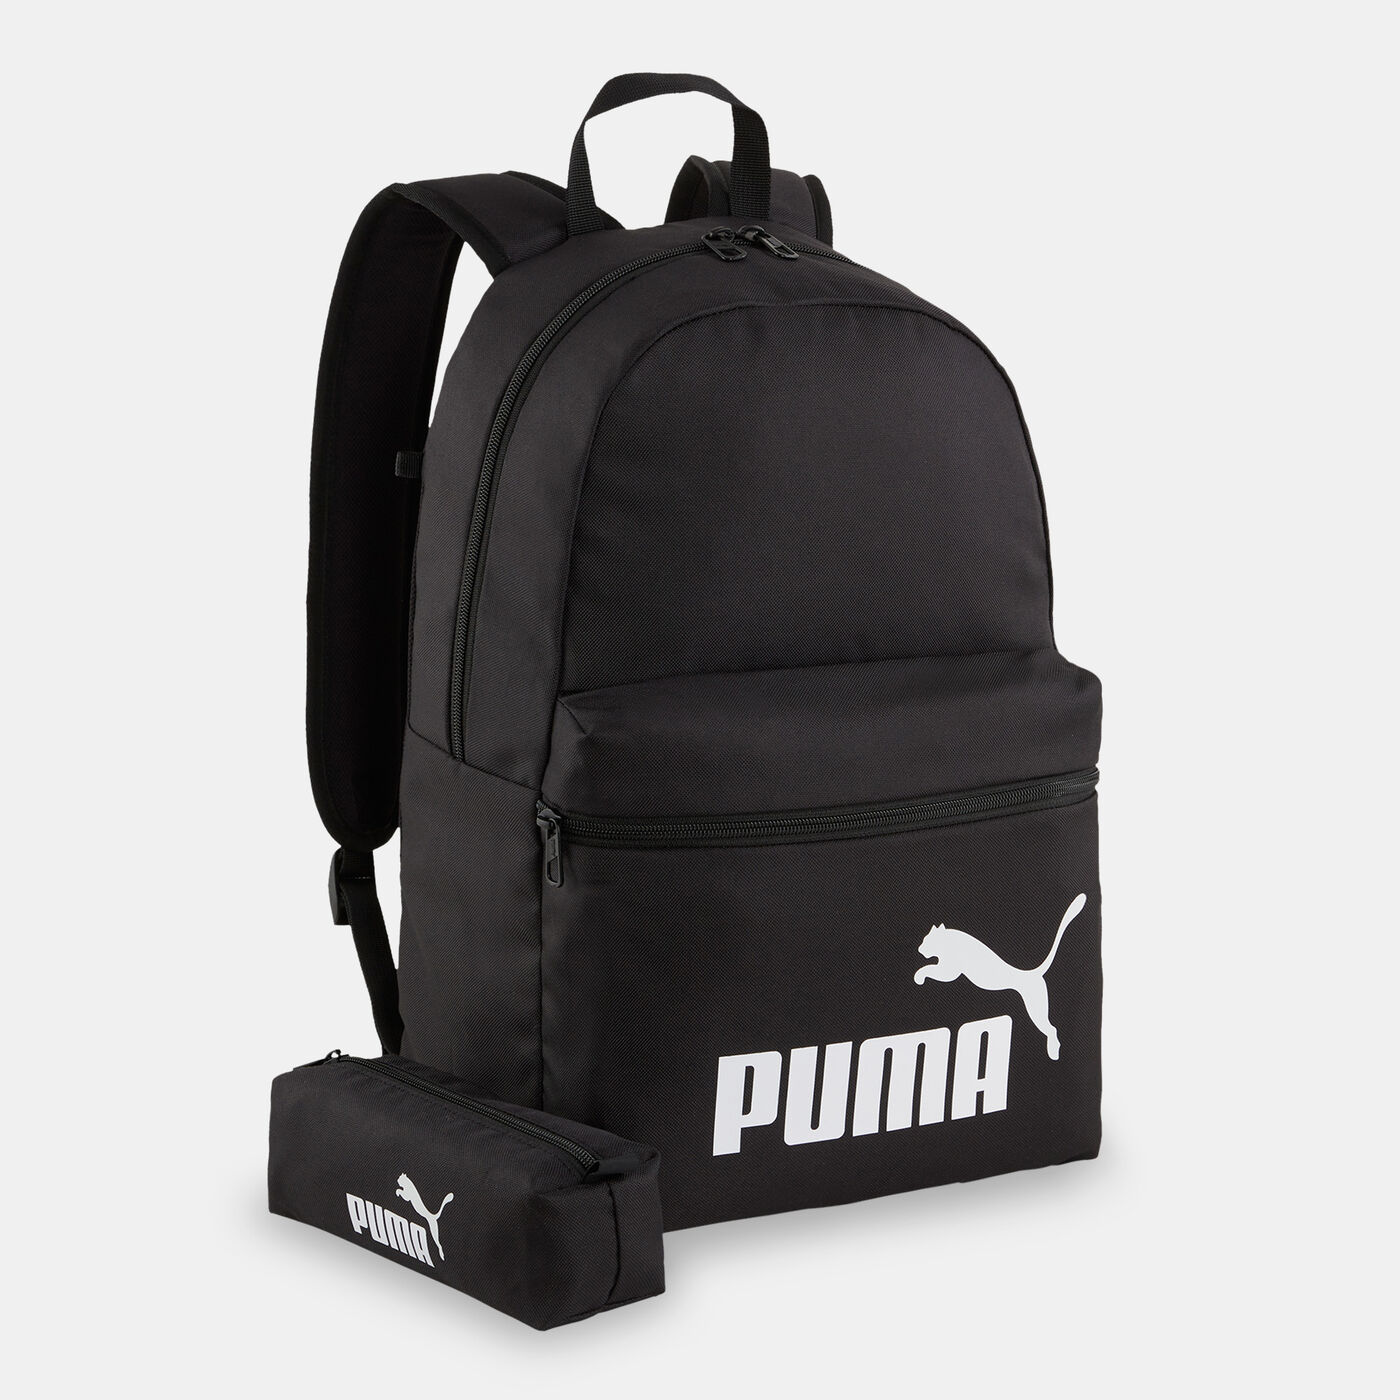 PHASE Backpack Set